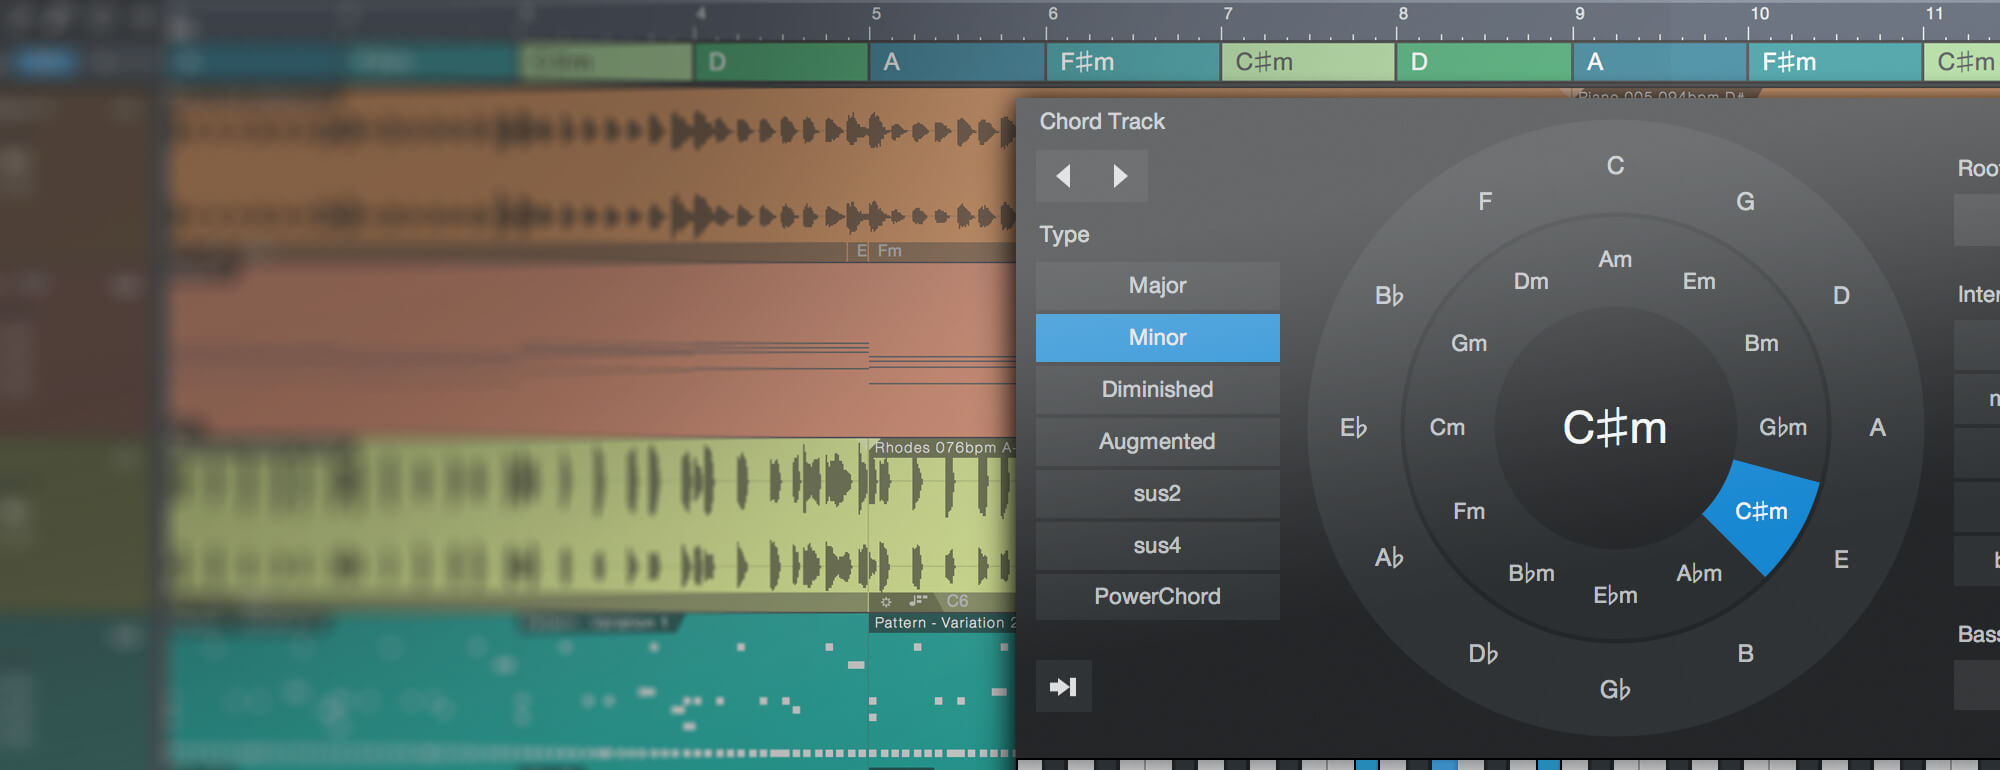 Studio one 4.5 midi editing software